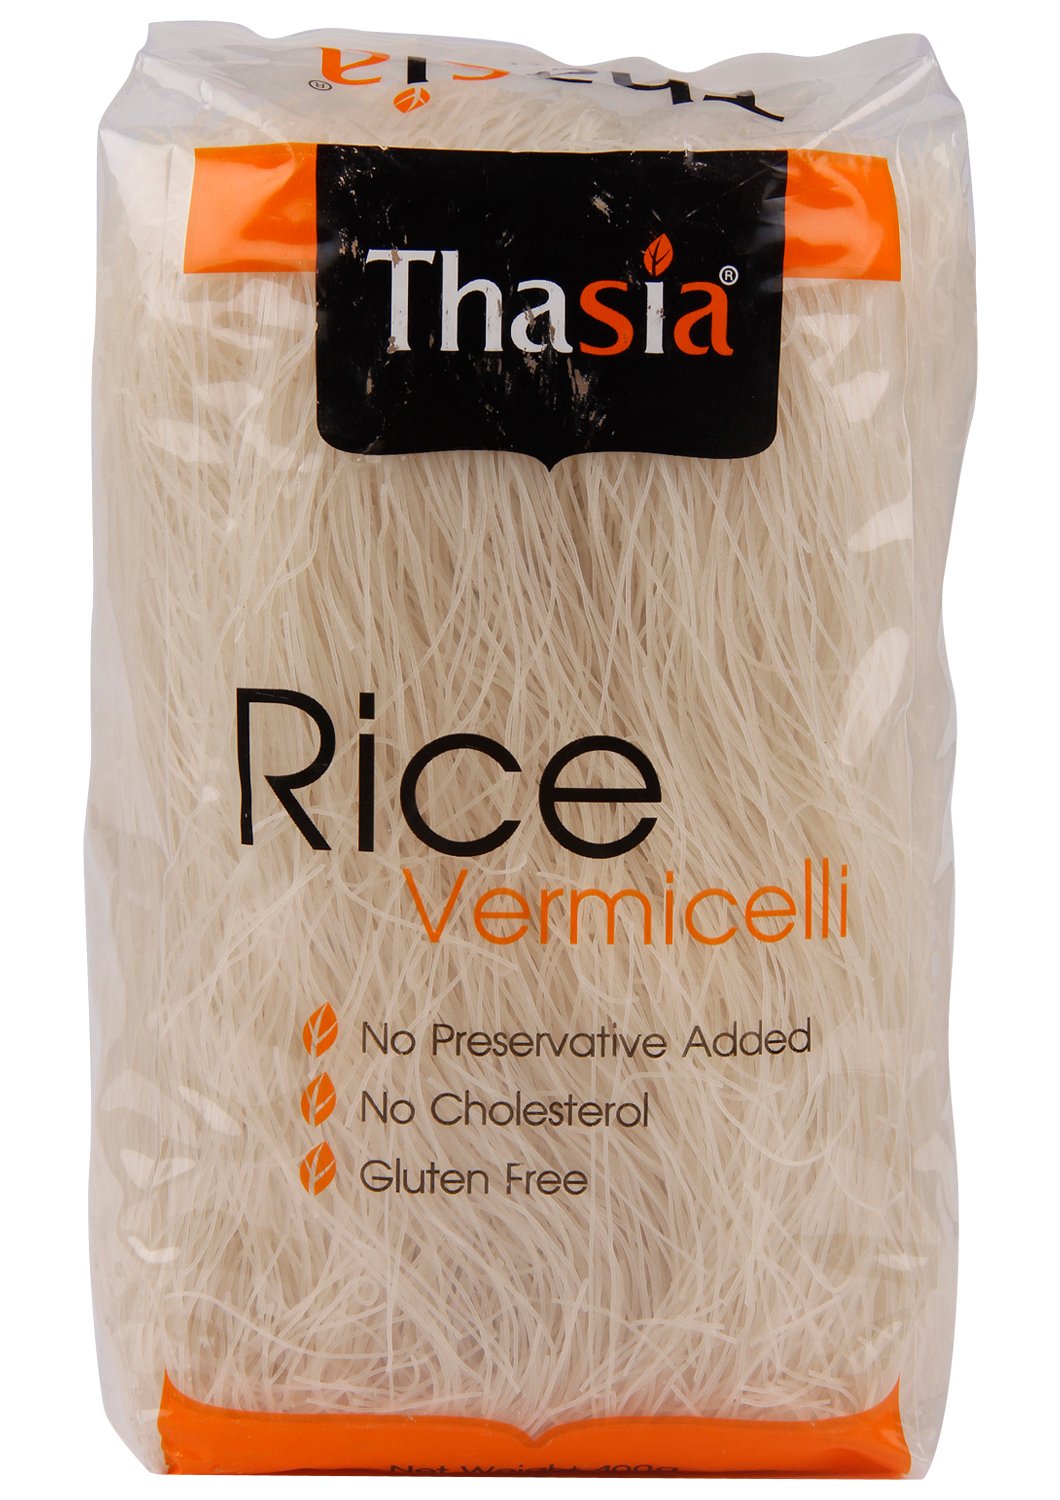 Thasia Rice Vermicelli, 200g